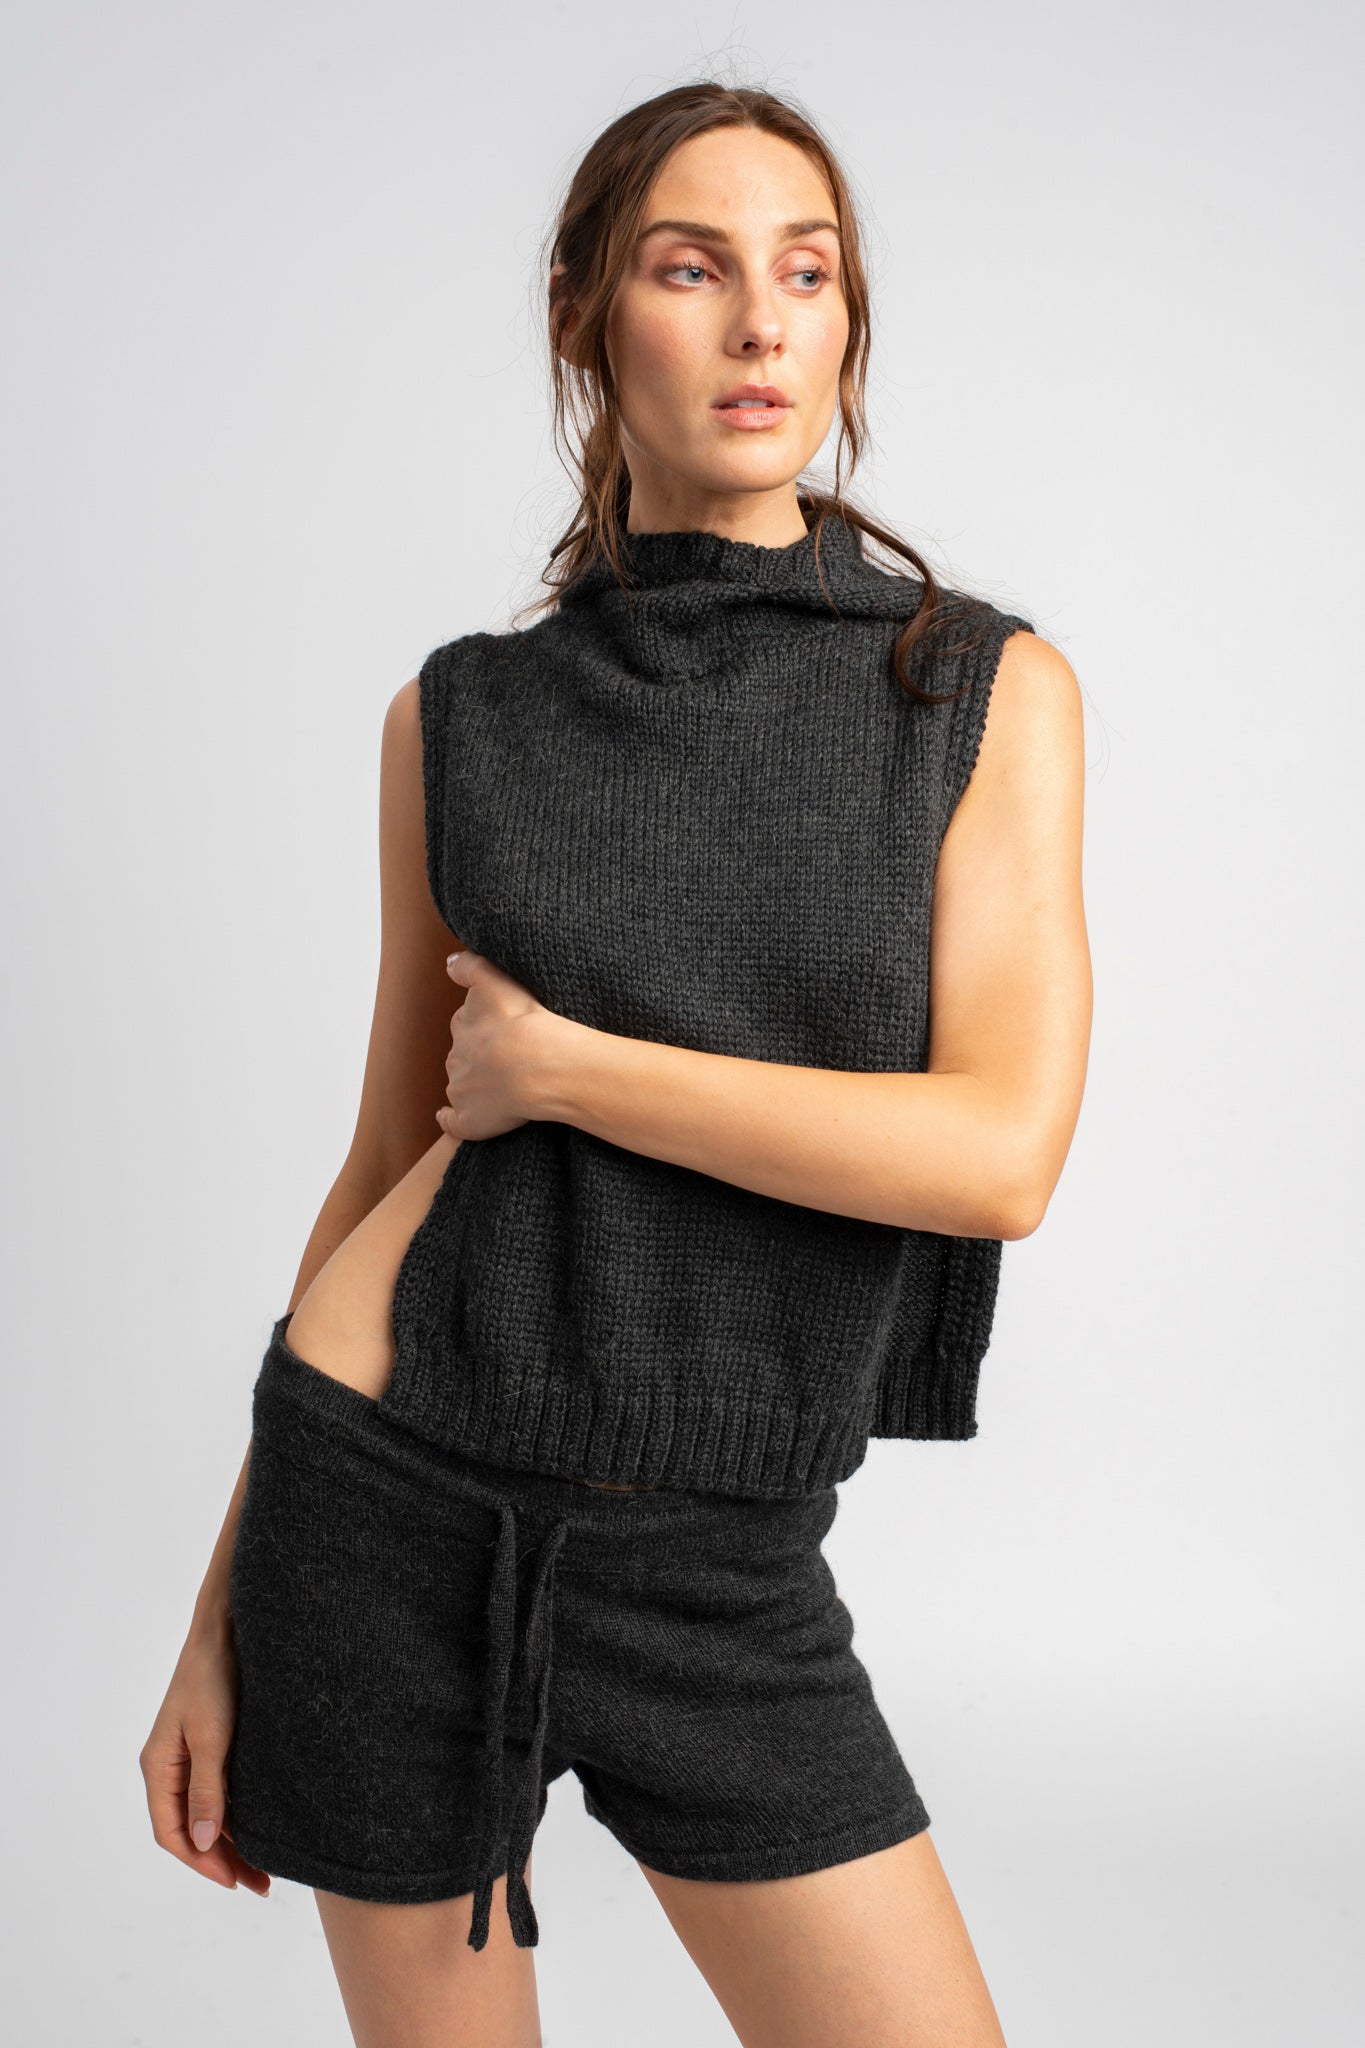 Grey Fair Shorts | Trade Knitwear Fluid Dark Alpaca Gender